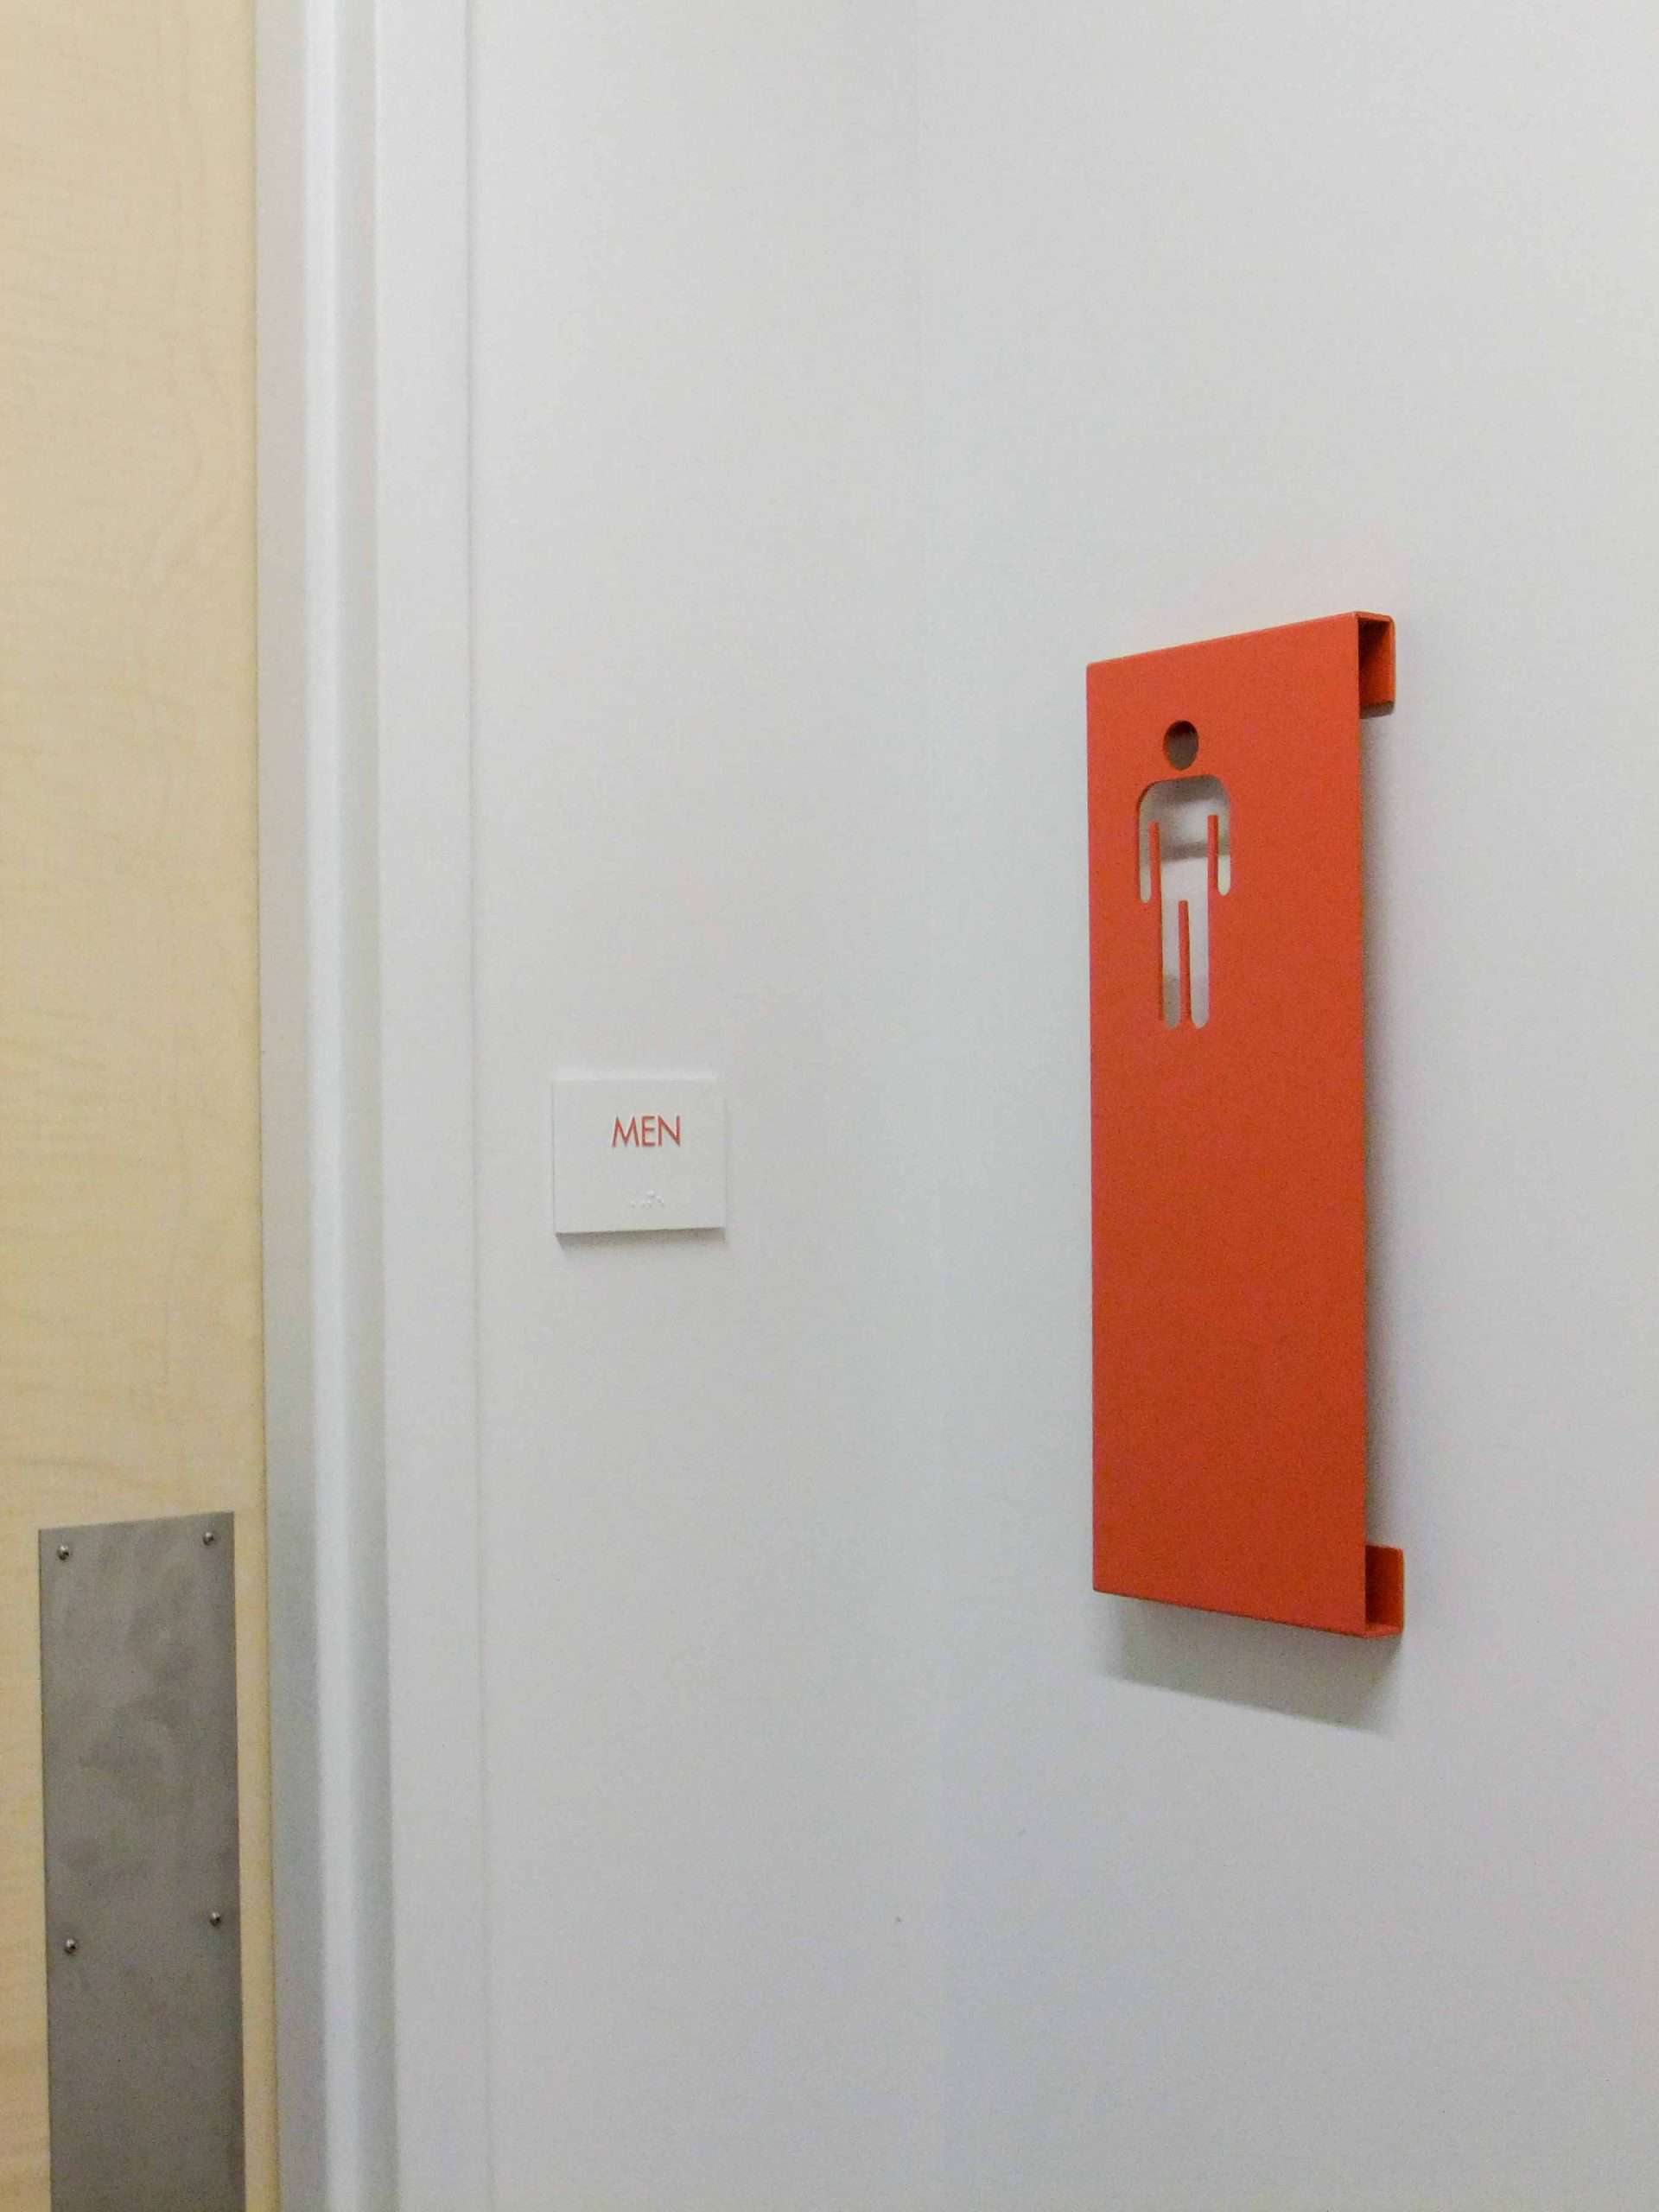 Custom metal restroom sign in orange